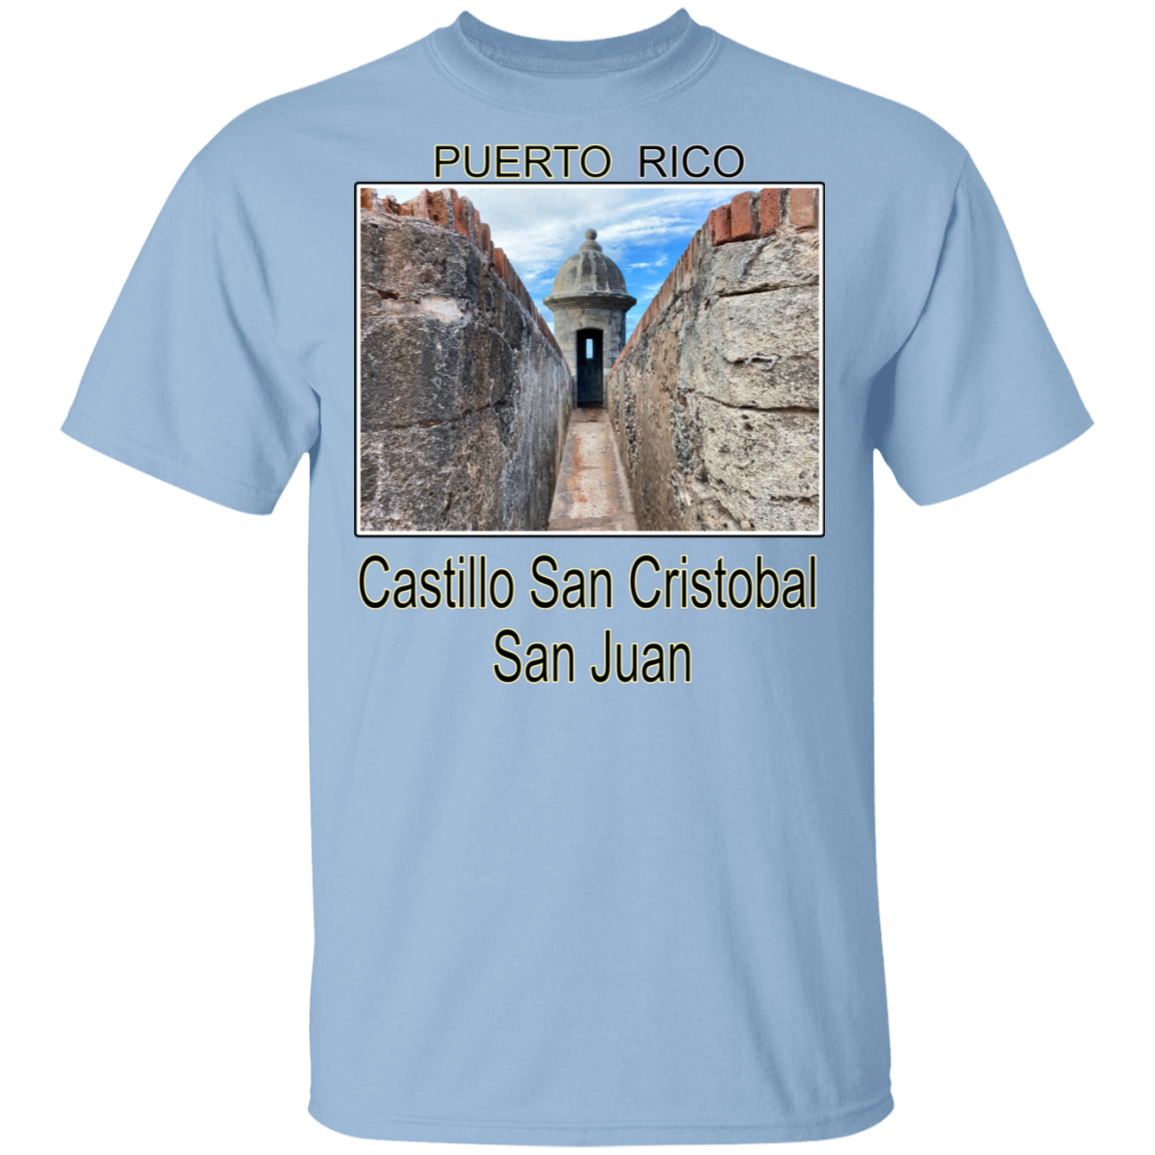 Castillo San Cristobal 5.3 oz. T-Shirt - Puerto Rican Pride